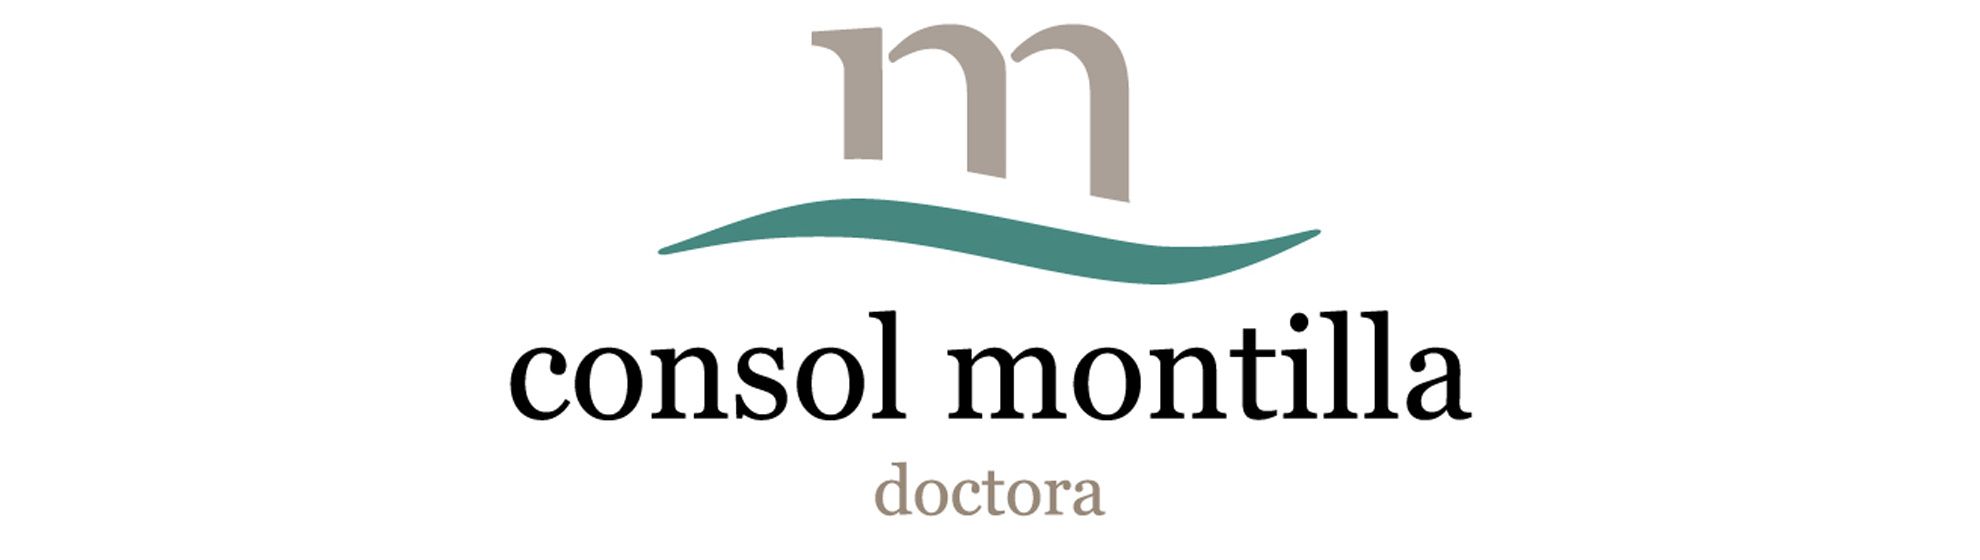 Dra. Consol Montilla